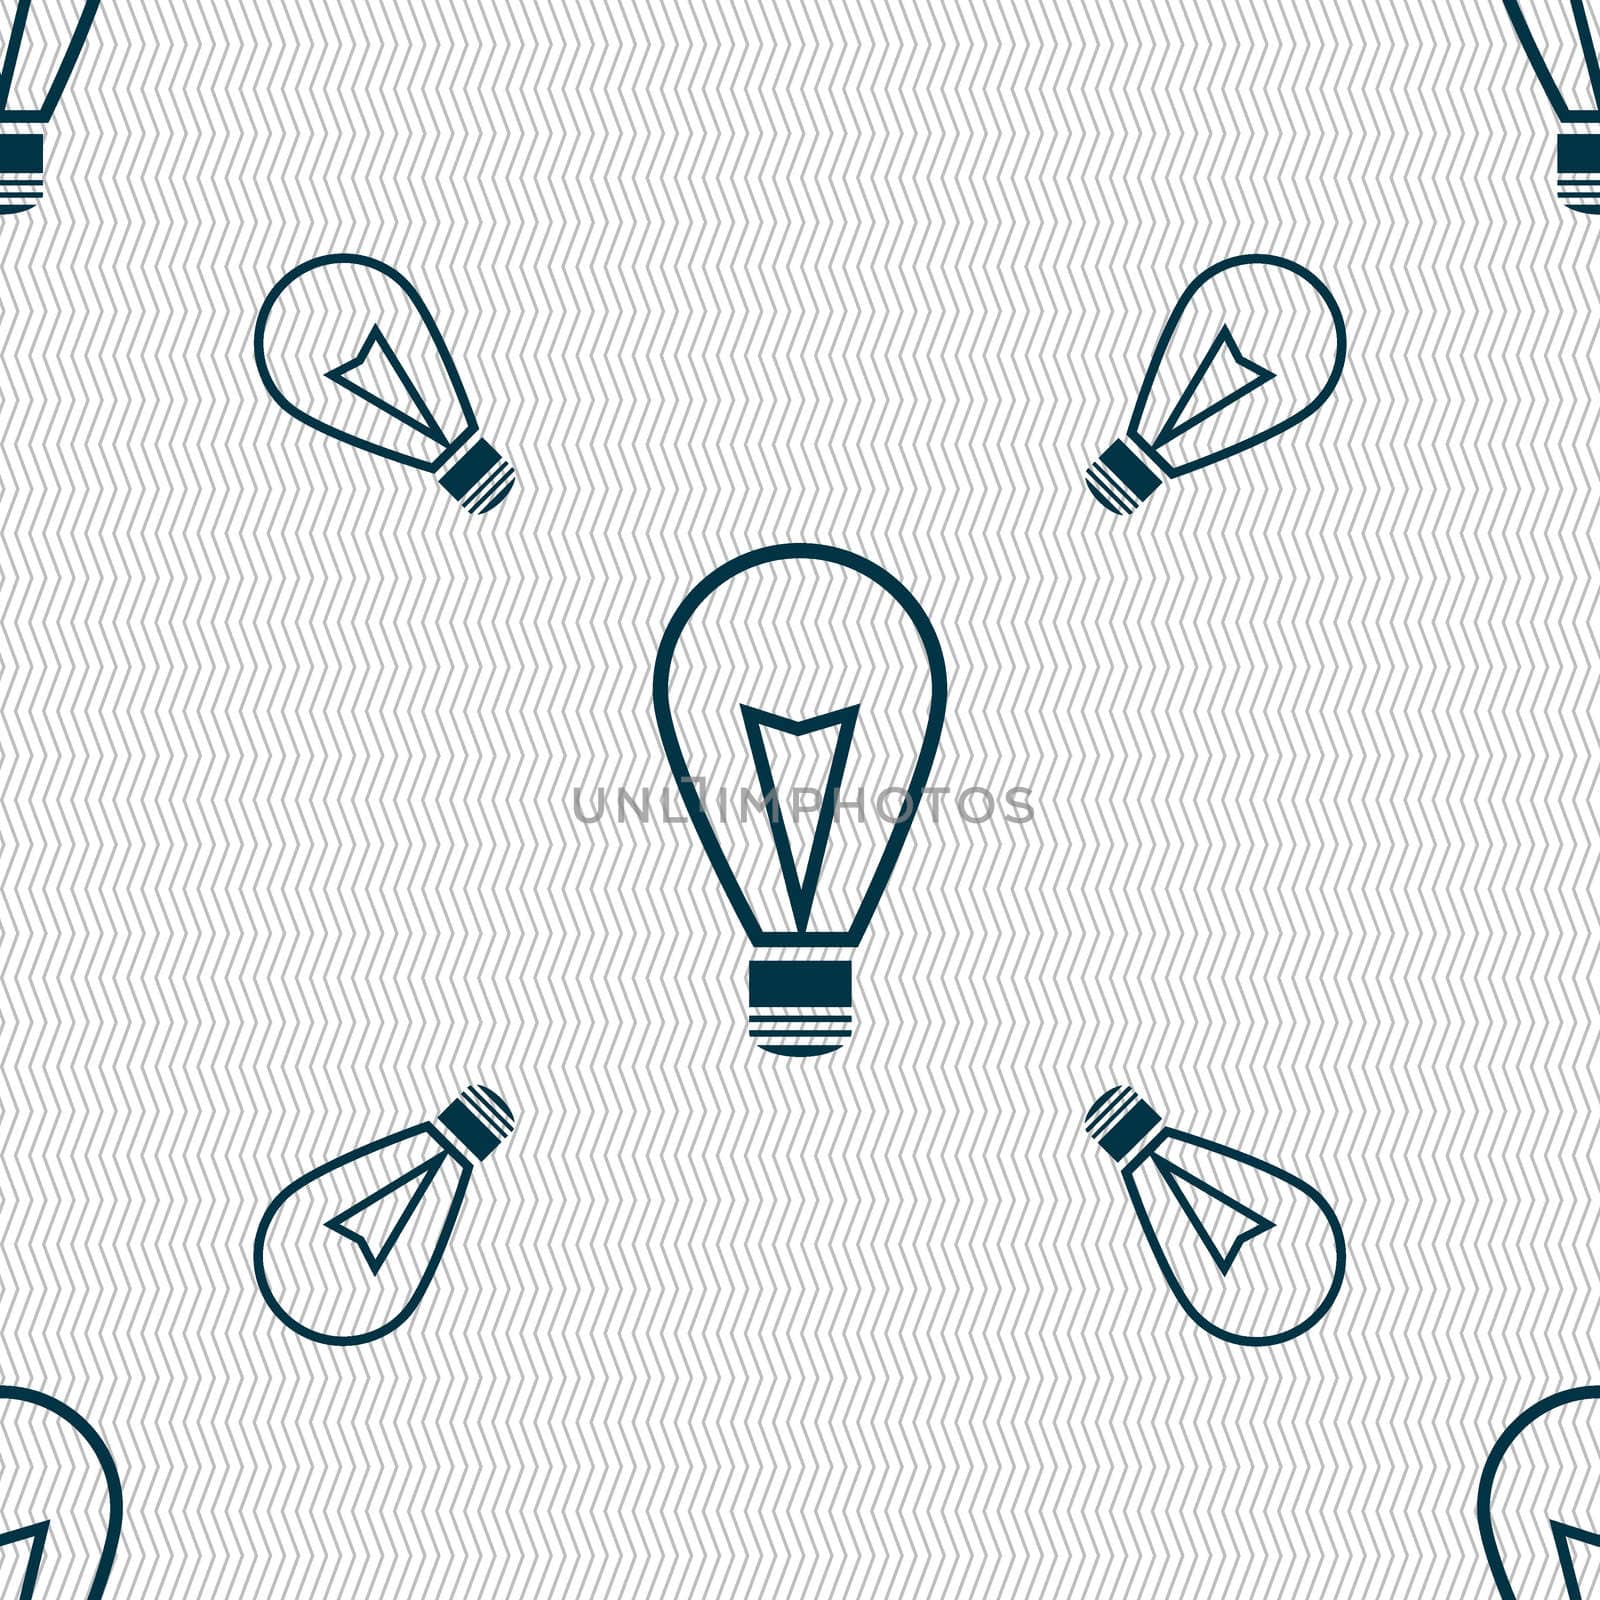 Light lamp sign icon. Idea symbol. Lightis on. Seamless pattern with geometric texture. illustration